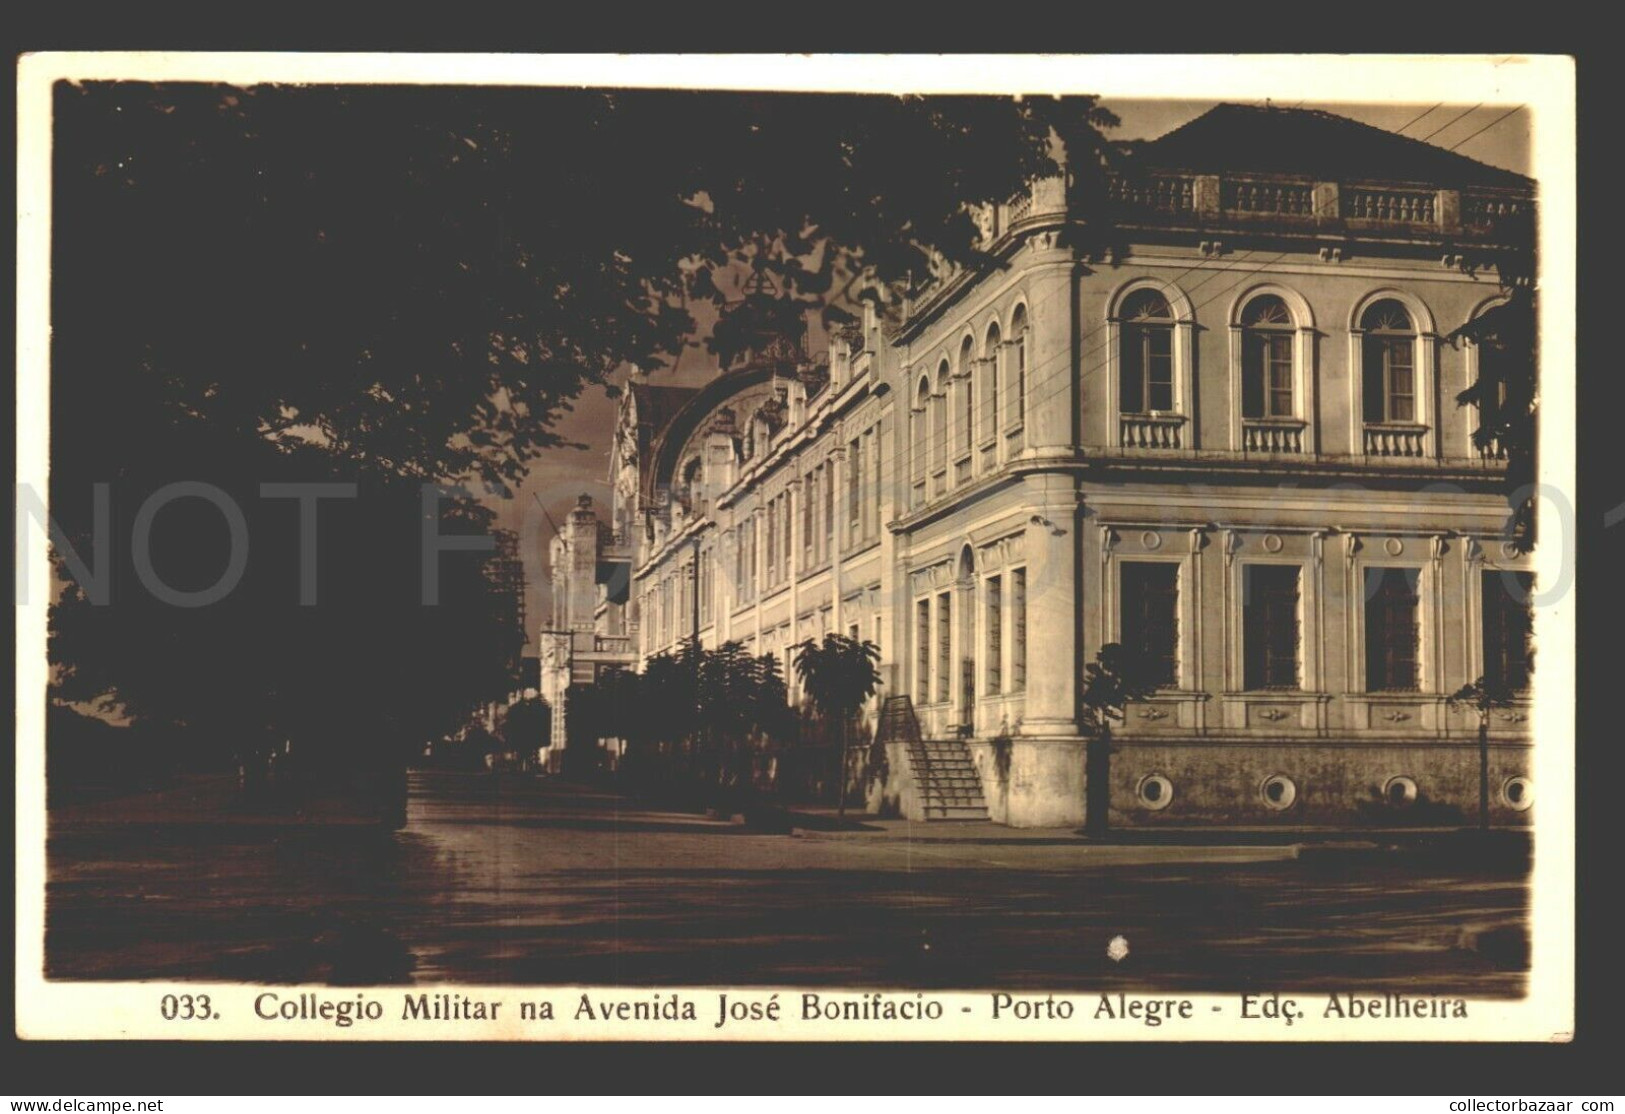 Military Brazil Porto Alegre Real Photo Original Postcard C1900 Edc. Abelheira - Porto Alegre